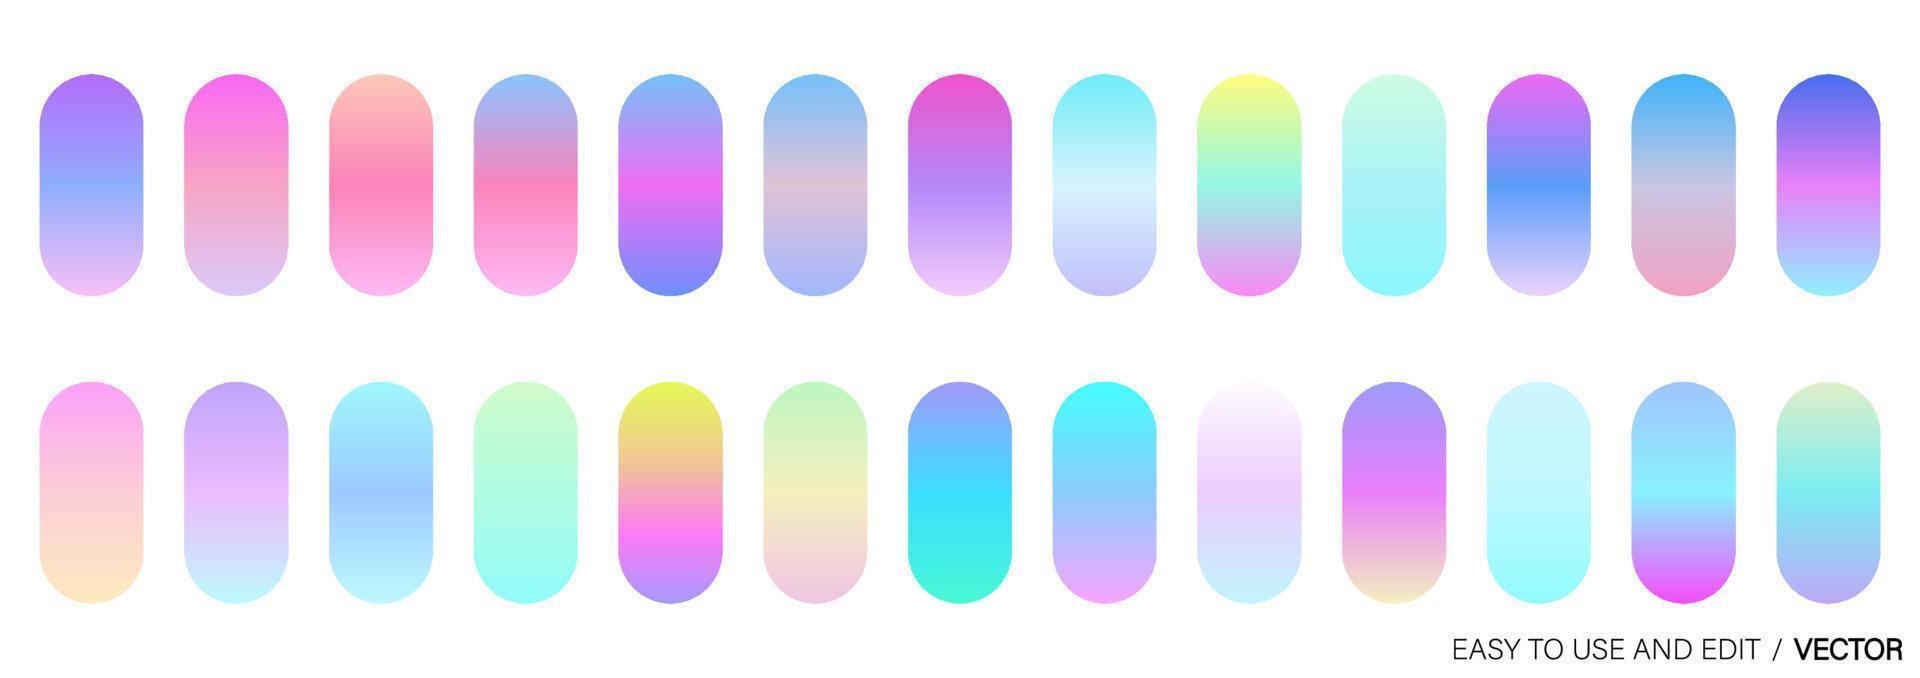 coleção de fundo gradiente moderno colorido para design gráfico. paleta de gradiente de cores na forma de círculos. vetor